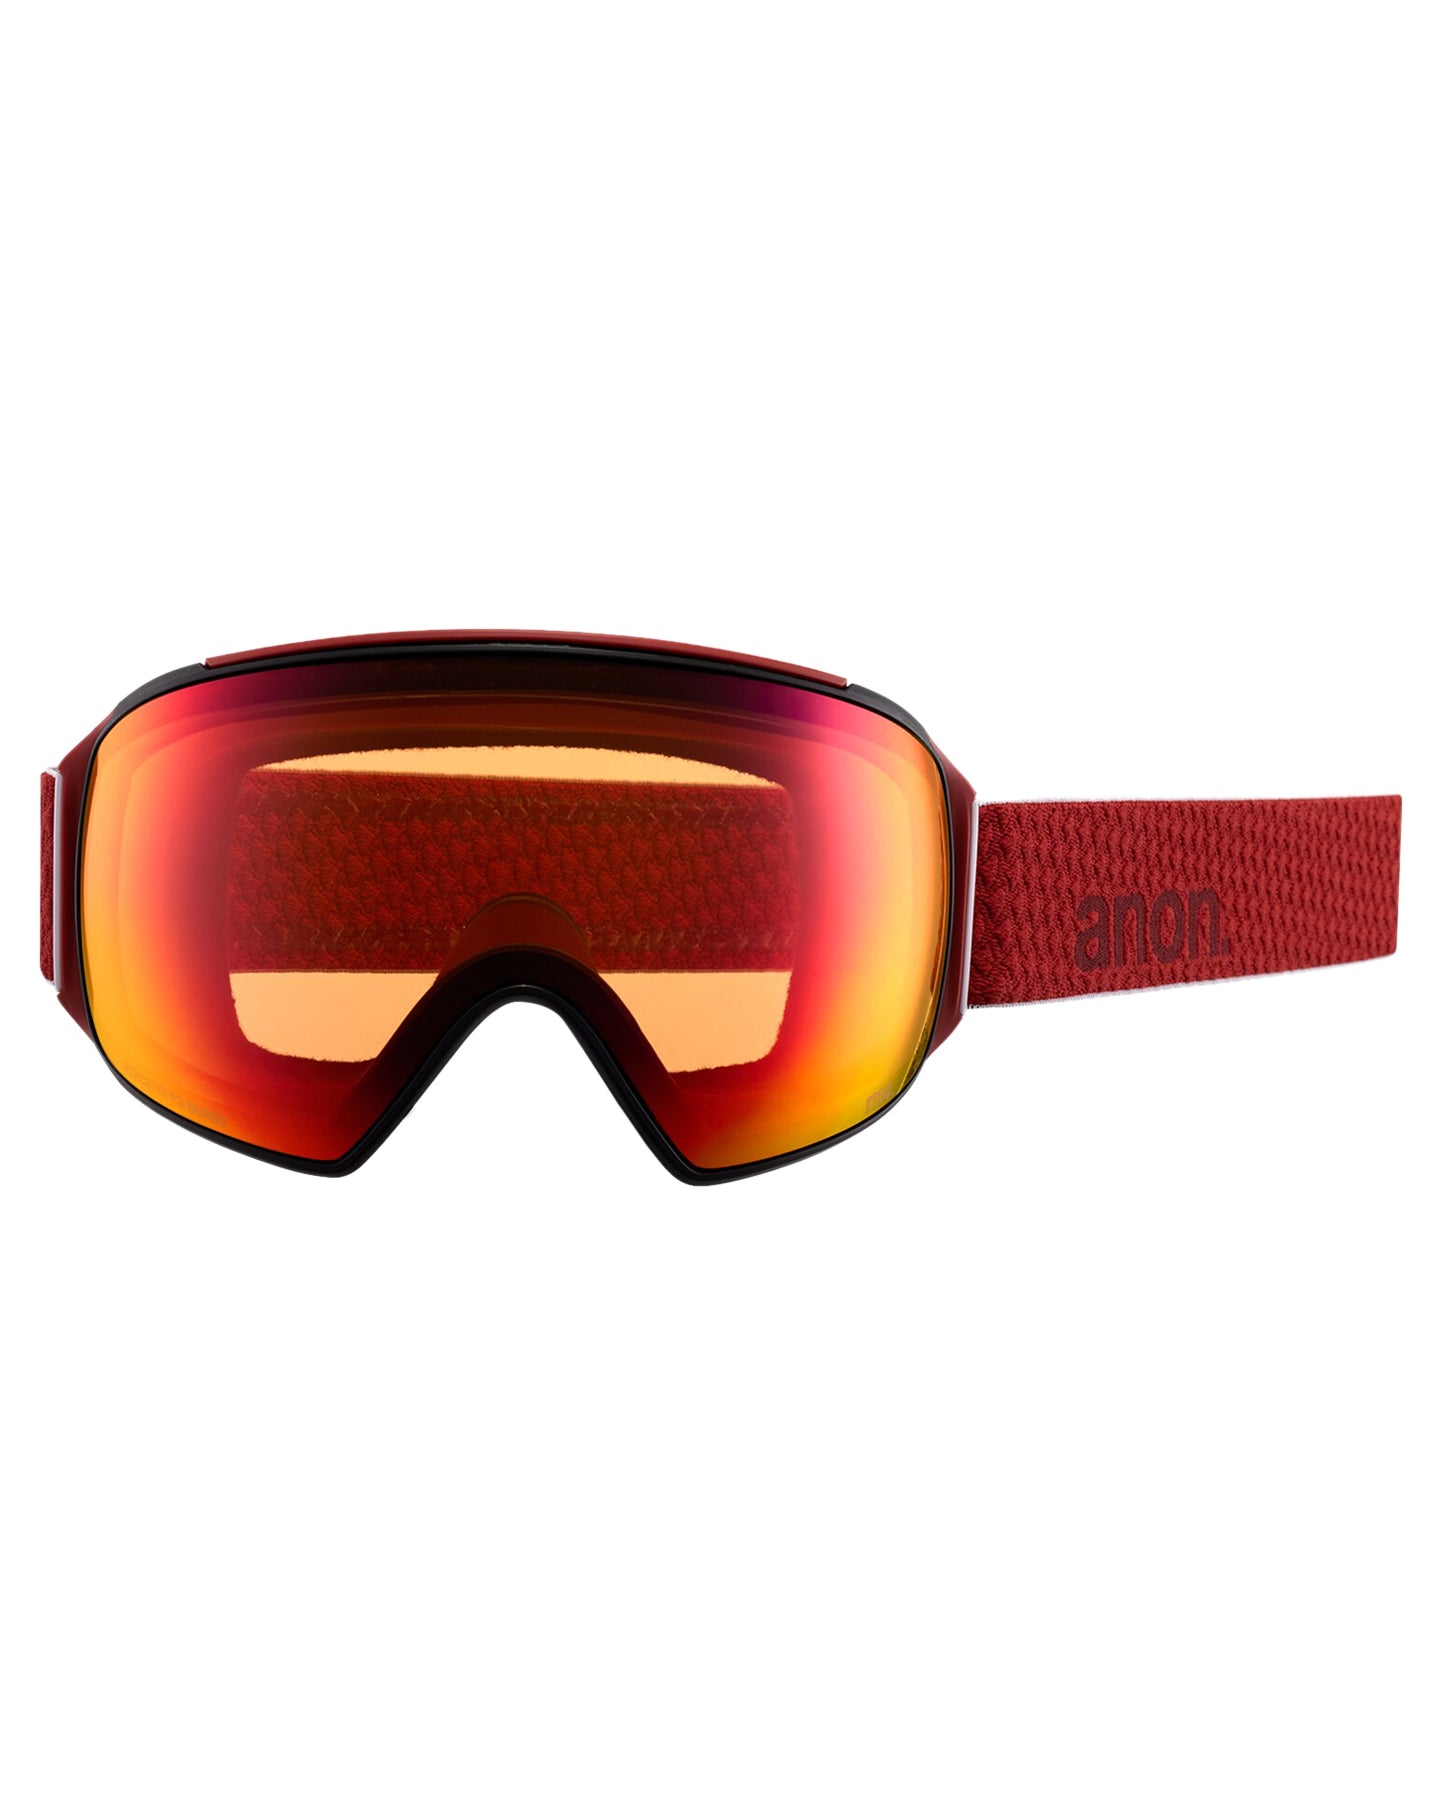 Anon M4 Toric Snow Goggles + Bonus Lens + Mfi® Face Mask - Mars/Perceive Sunny Red Lens Men's Snow Goggles - Trojan Wake Ski Snow